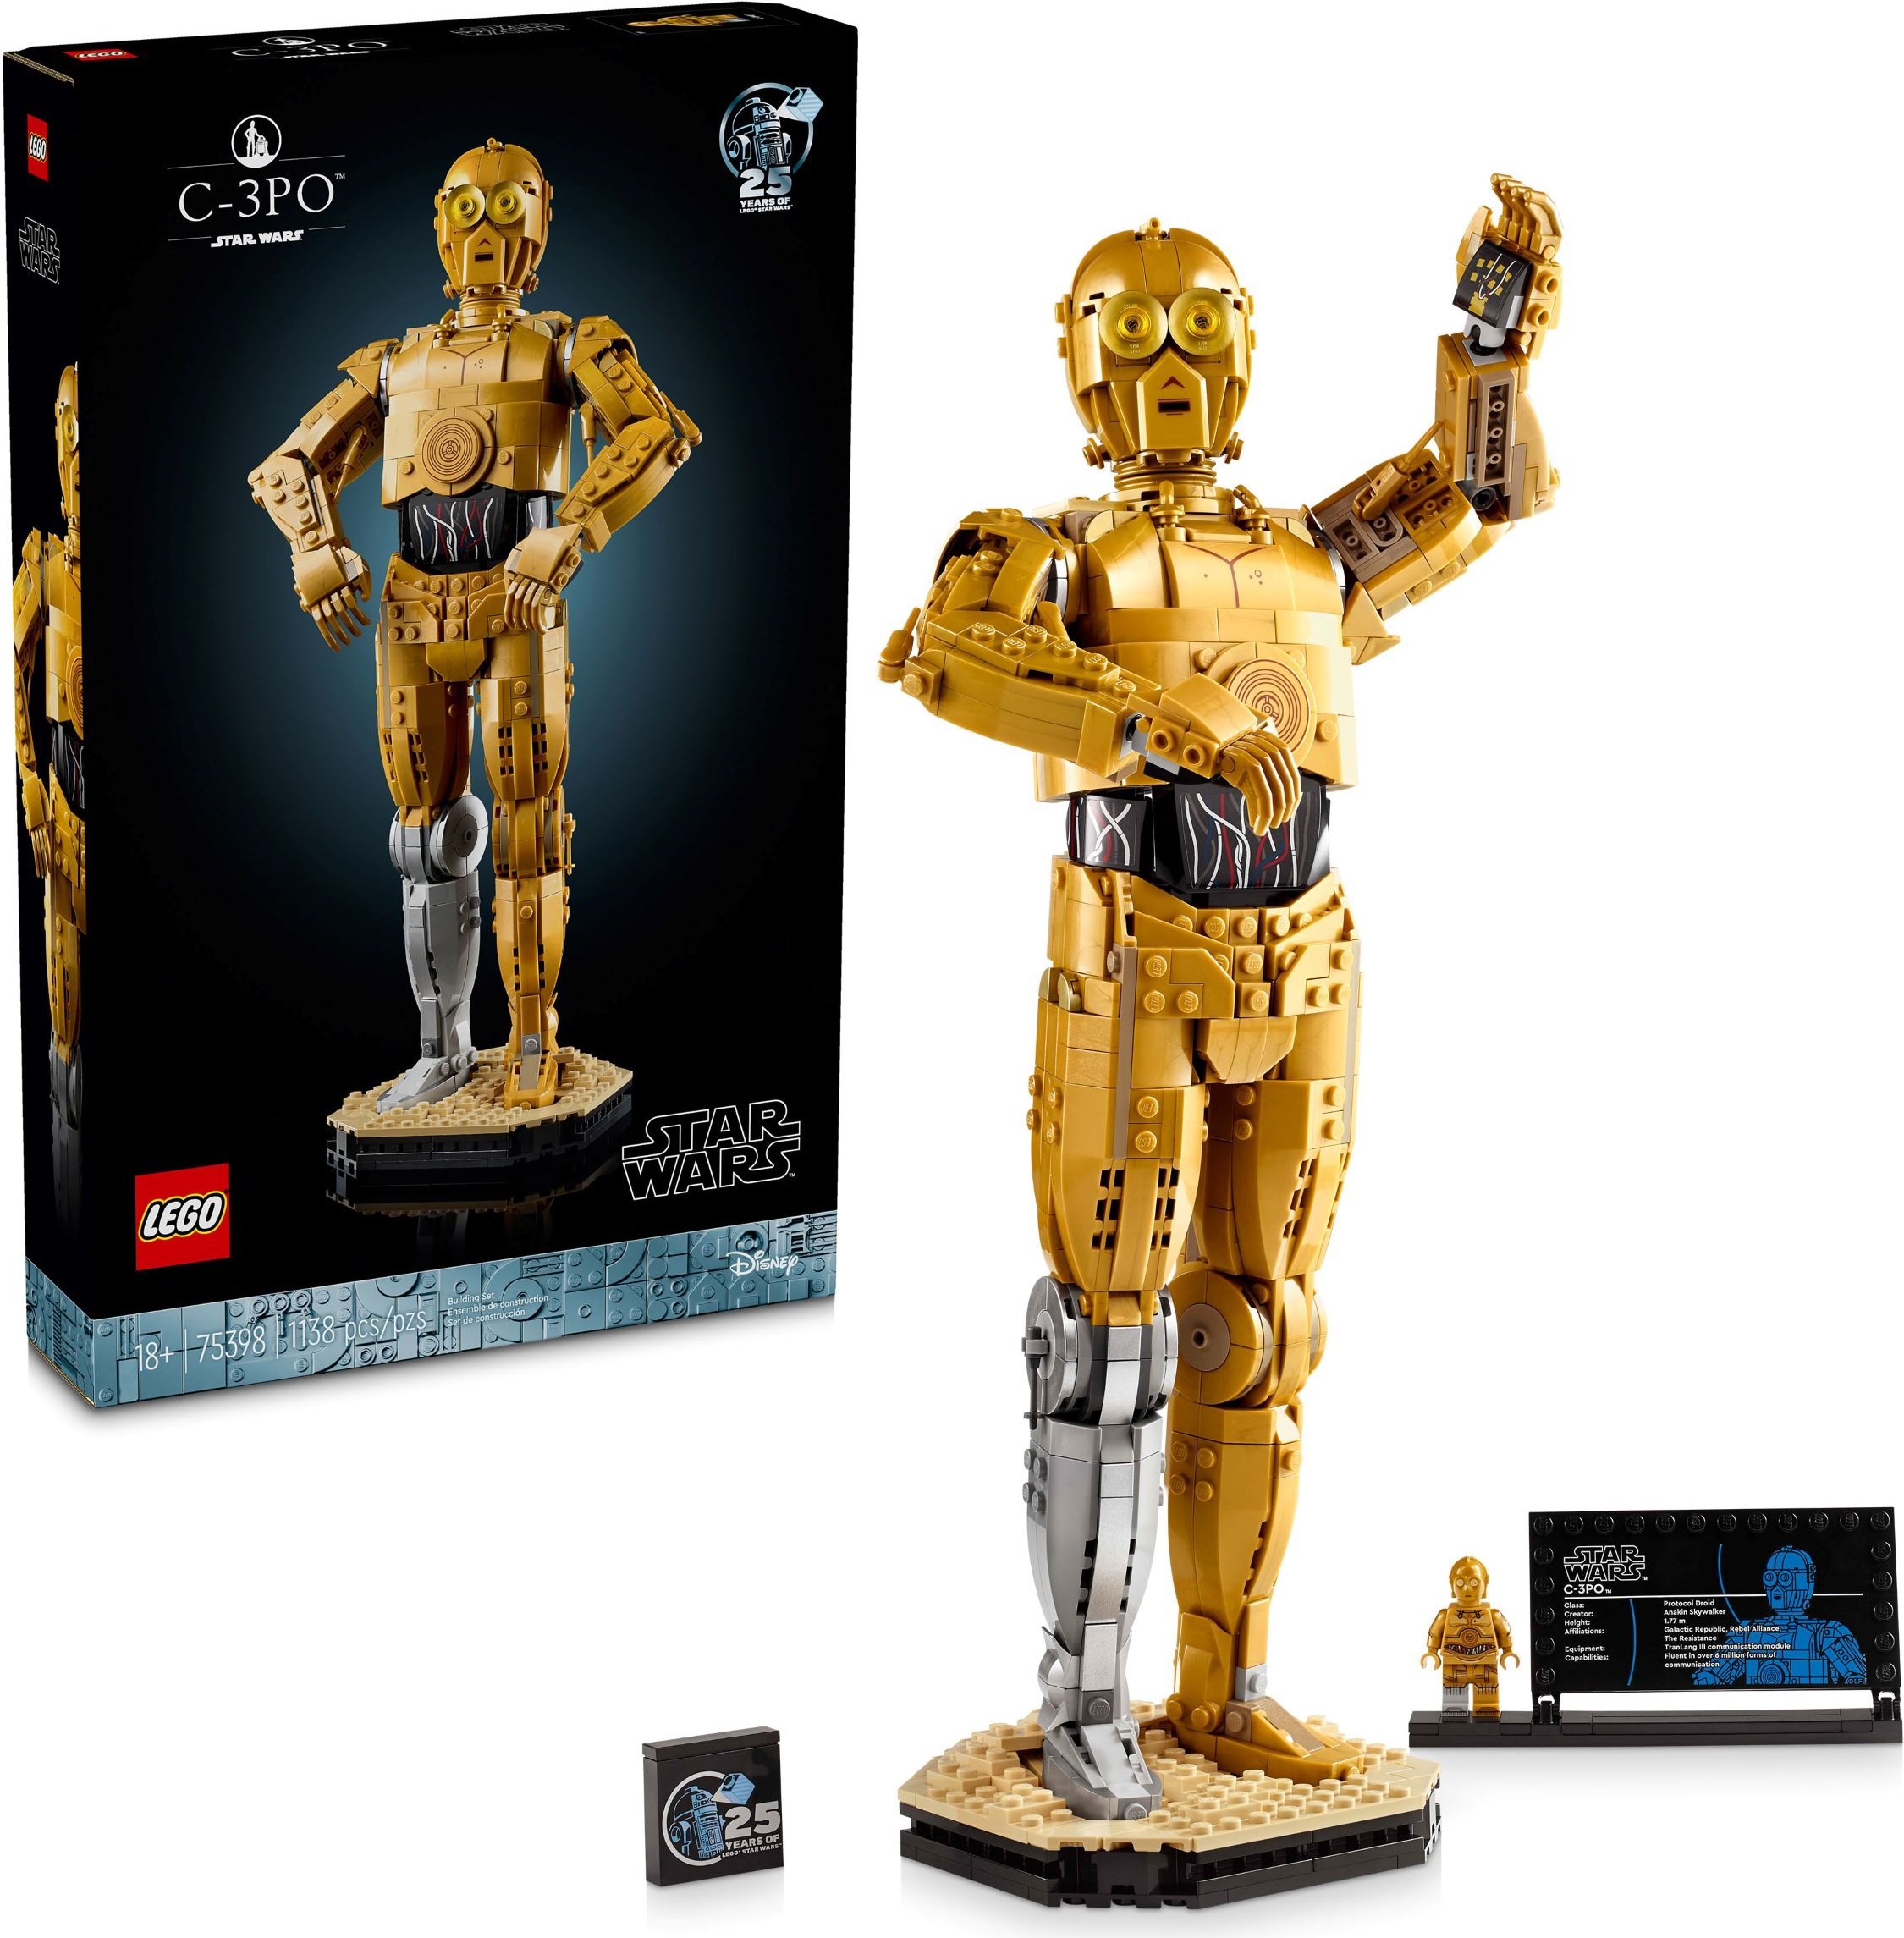 LEGO Star Wars - C-3PO - set 75398